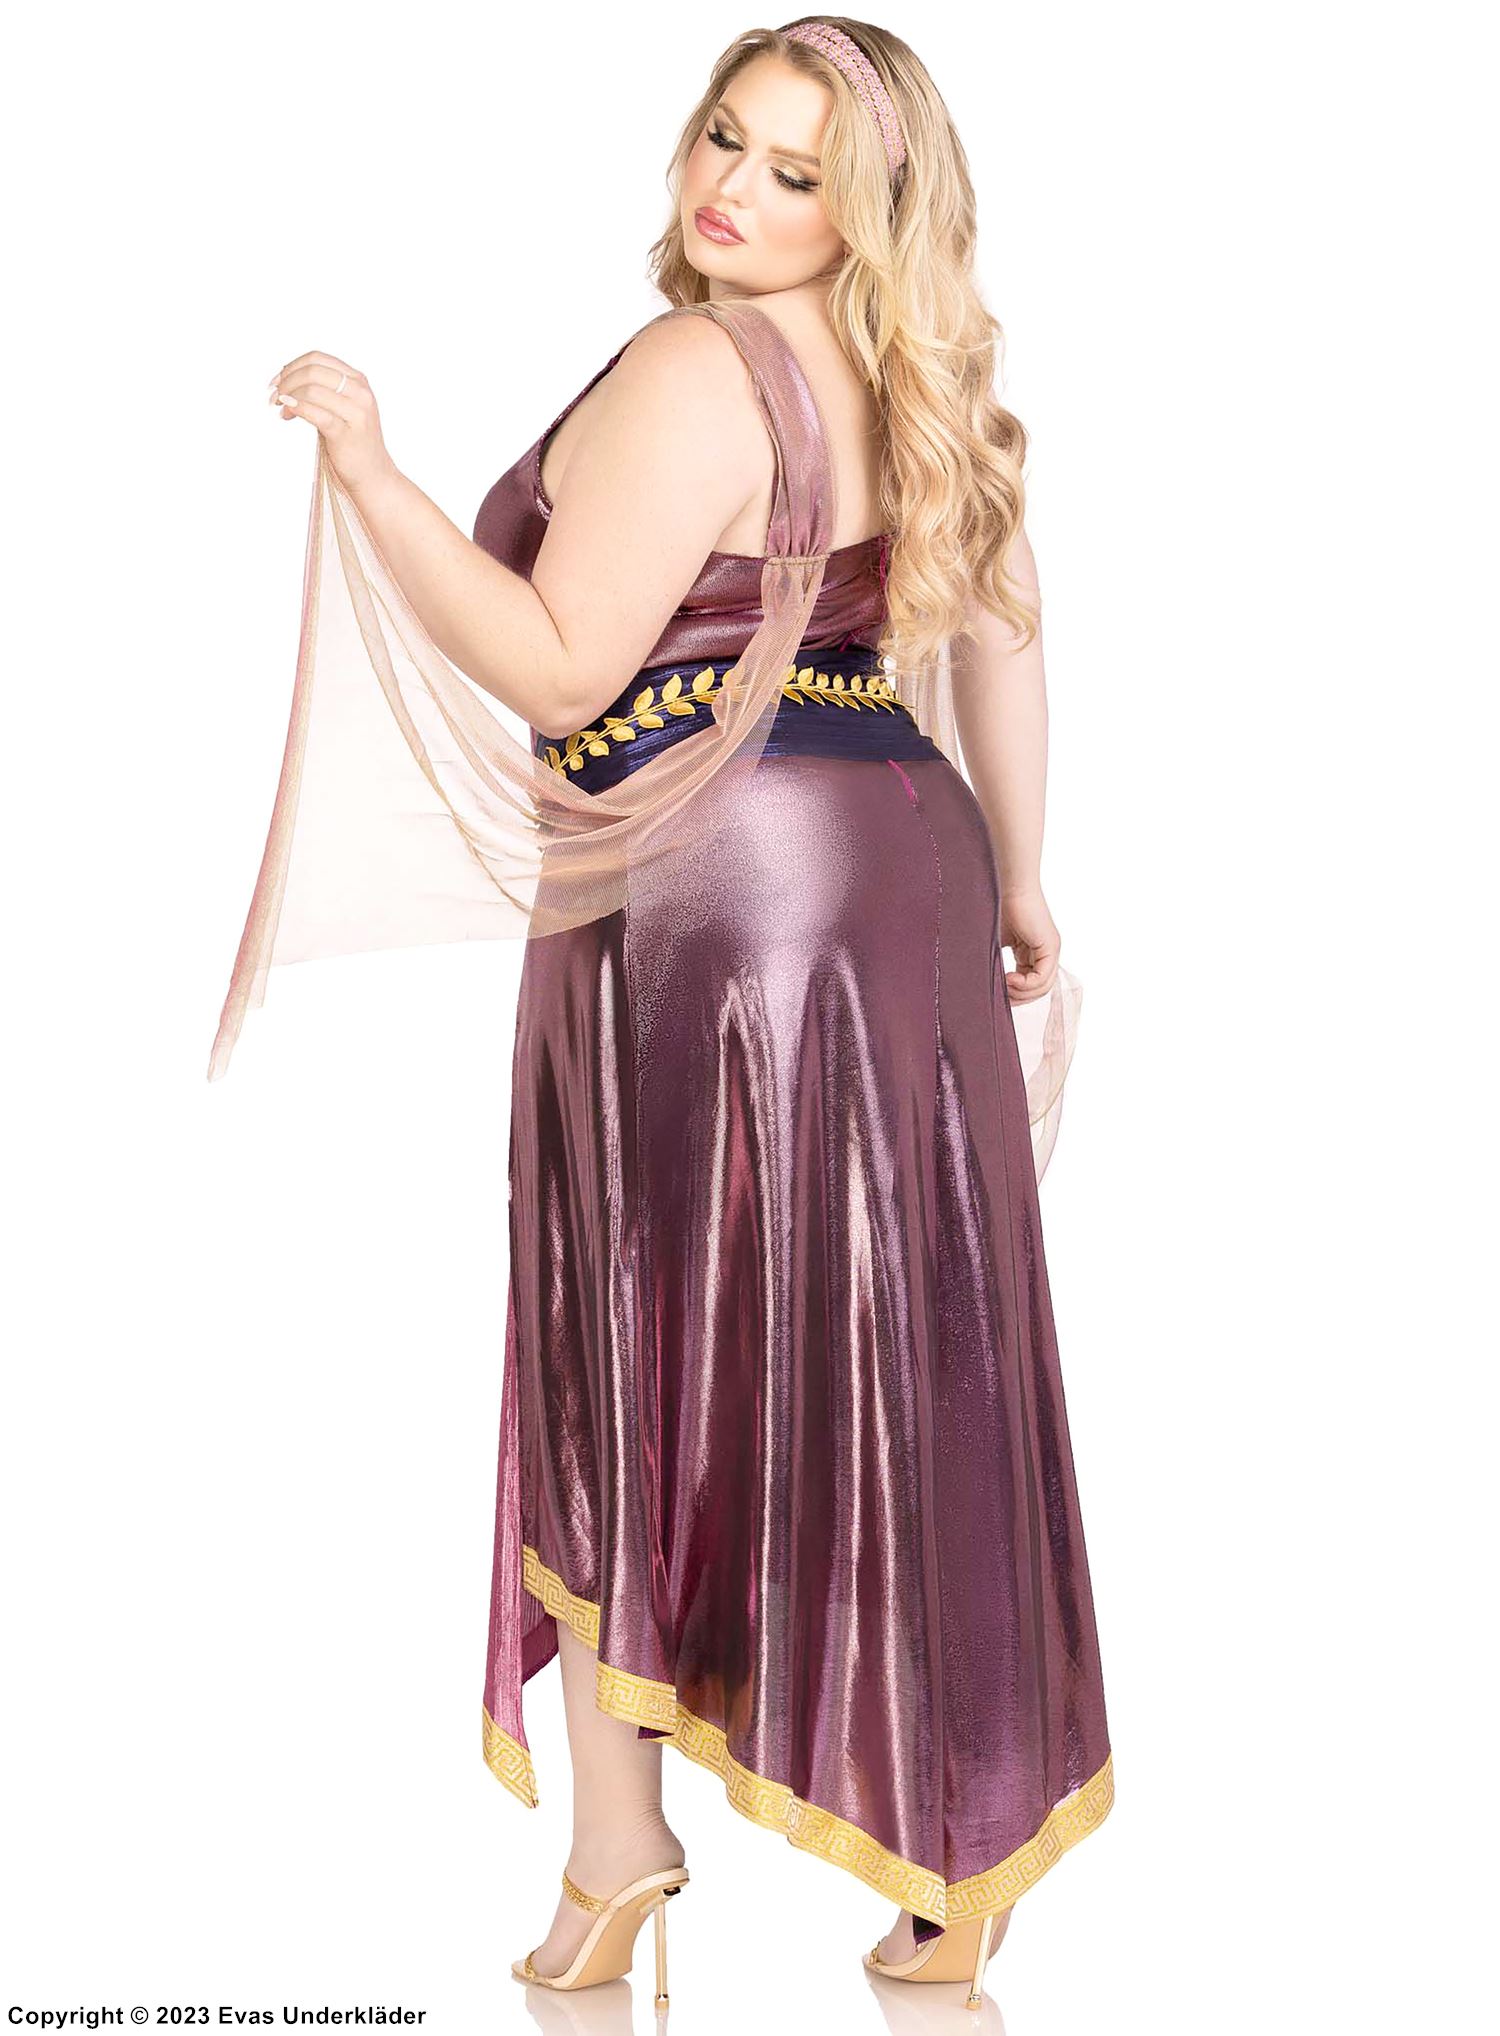 Goddess, costume dress, high slit, sash, plus size